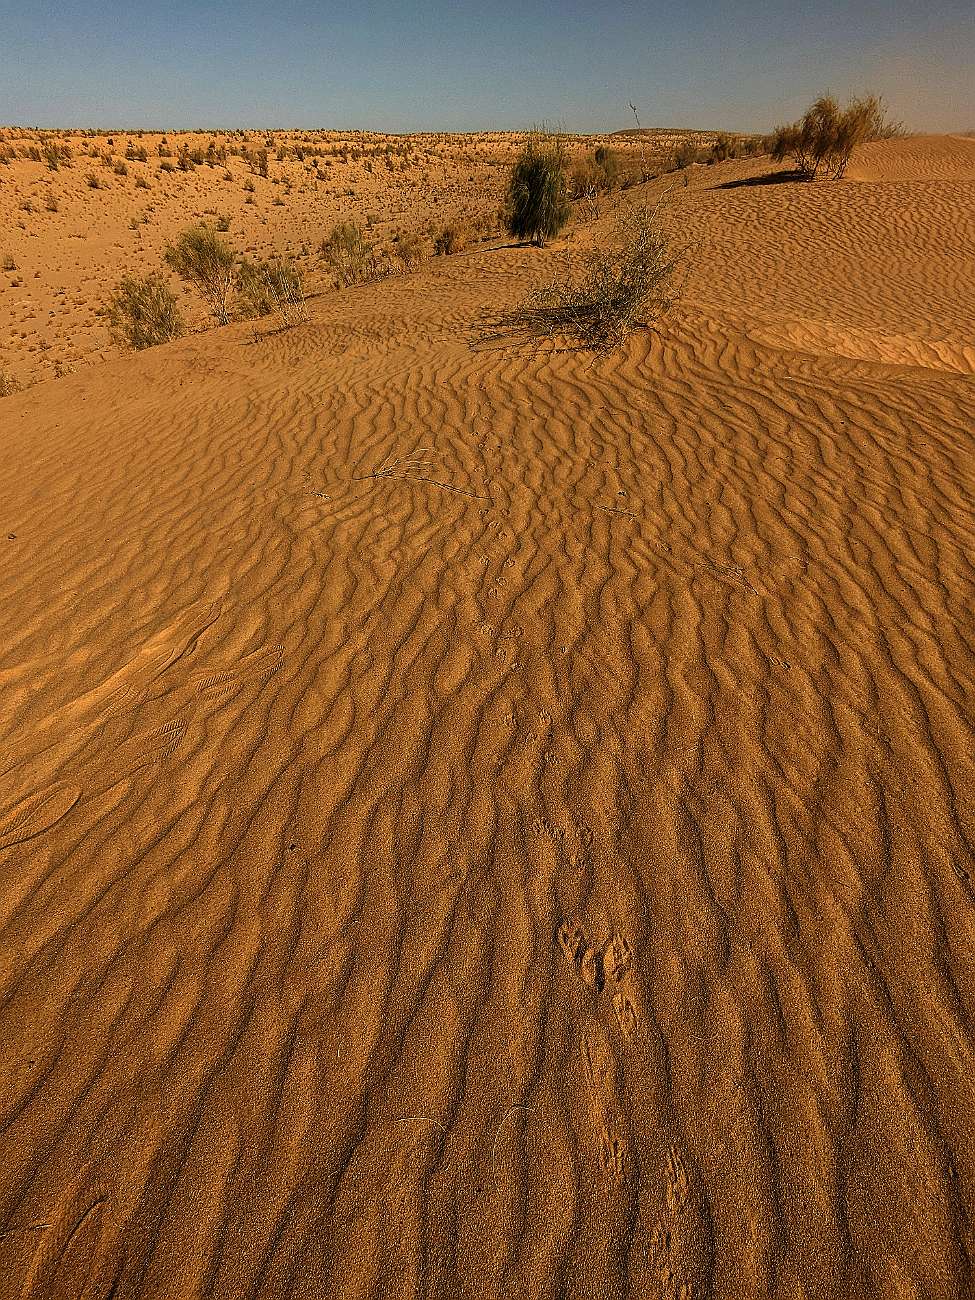 The Gates of Hell (Darwaza, Turkmenistan) - through the desert